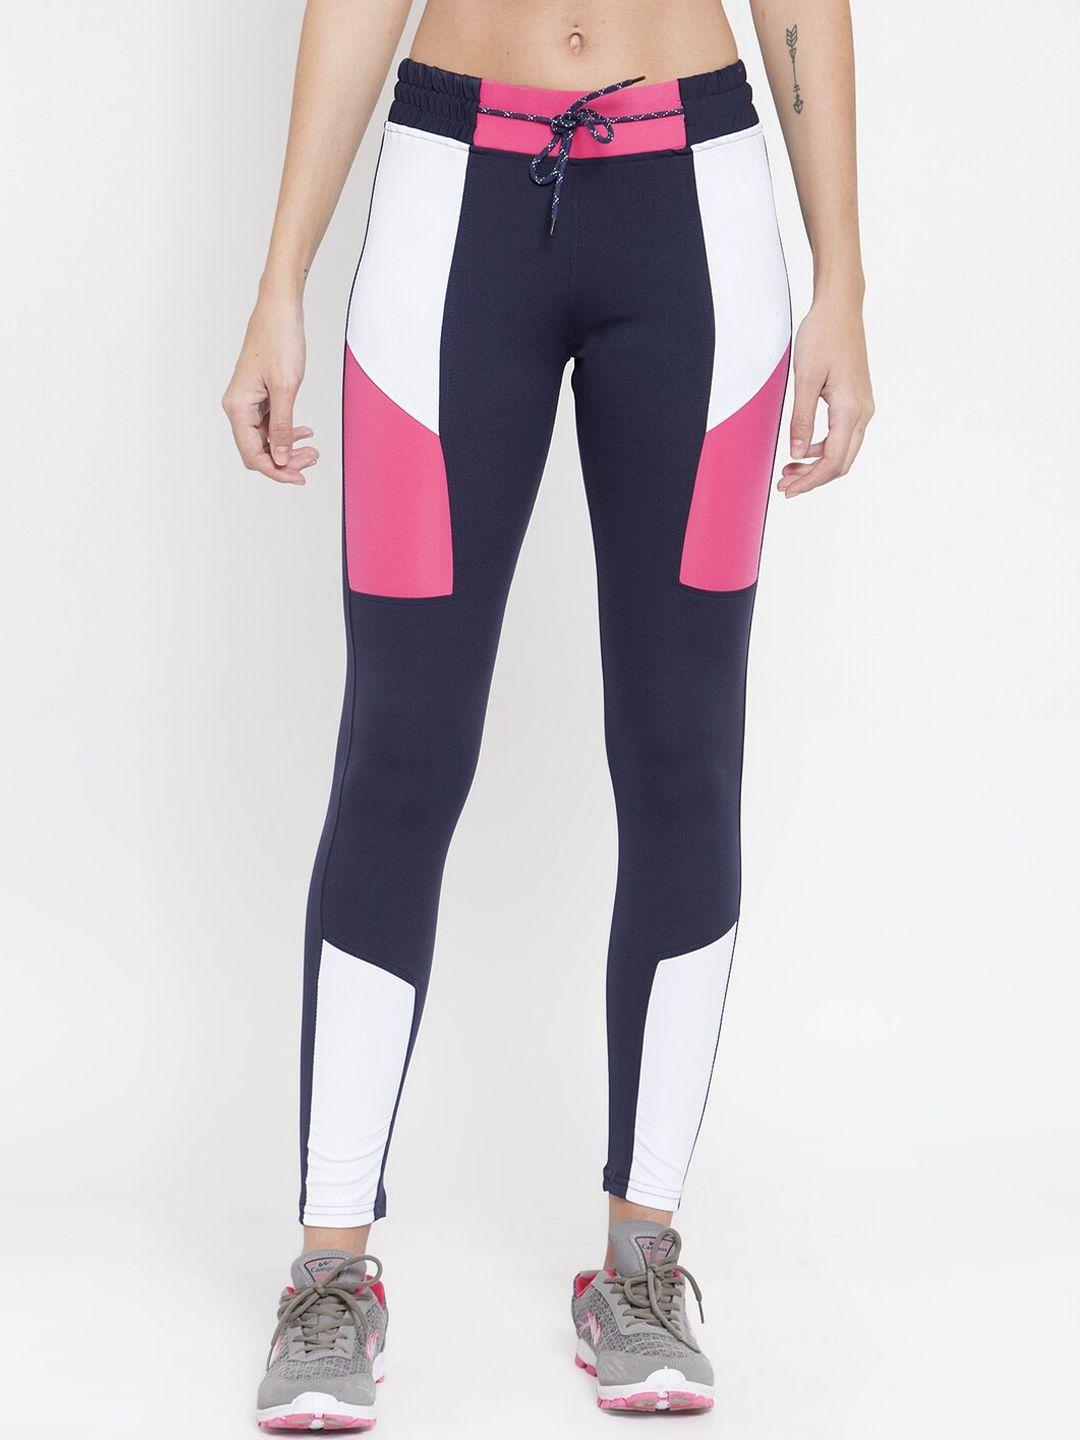 clora creation women navy blue & pink colourblocked slim-fit training tights